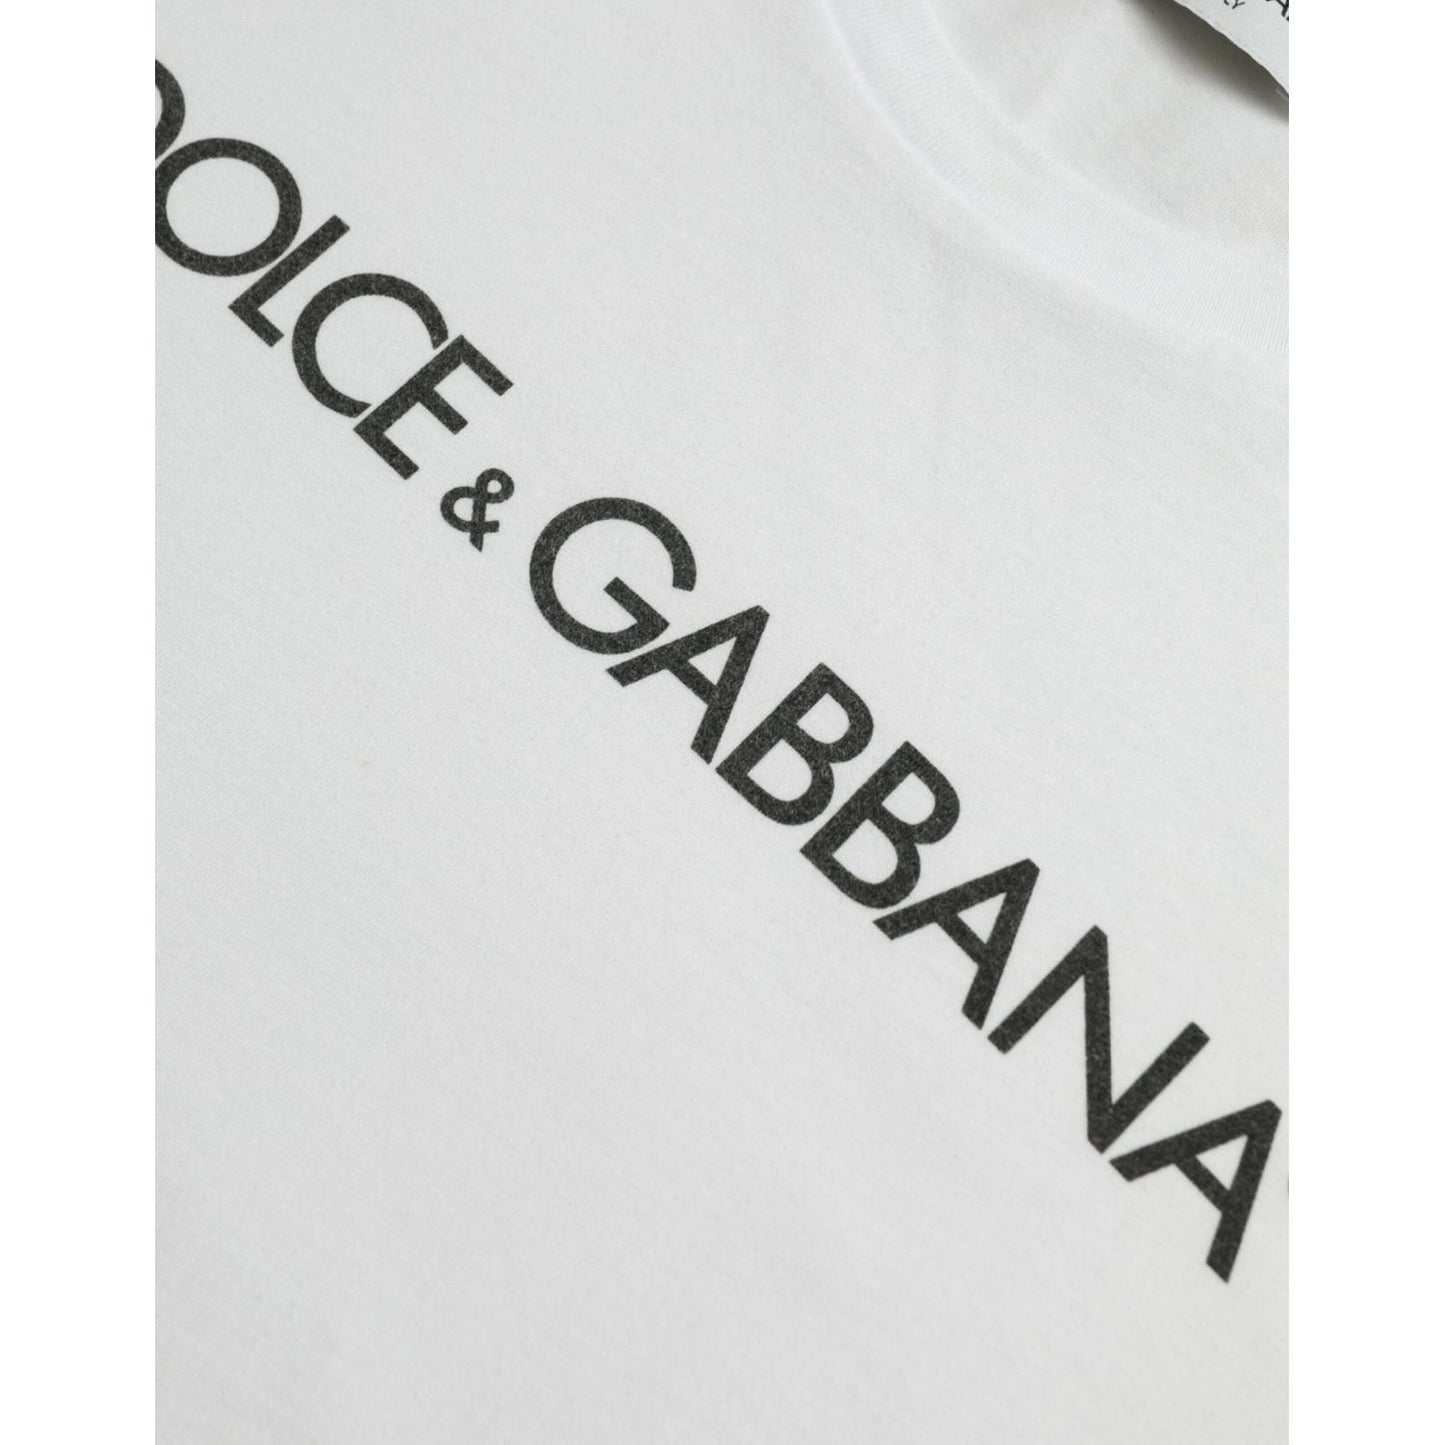 Dolce & Gabbana White Logo Print Cotton Crew Neck T-shirt white-logo-print-cotton-crew-neck-t-shirt